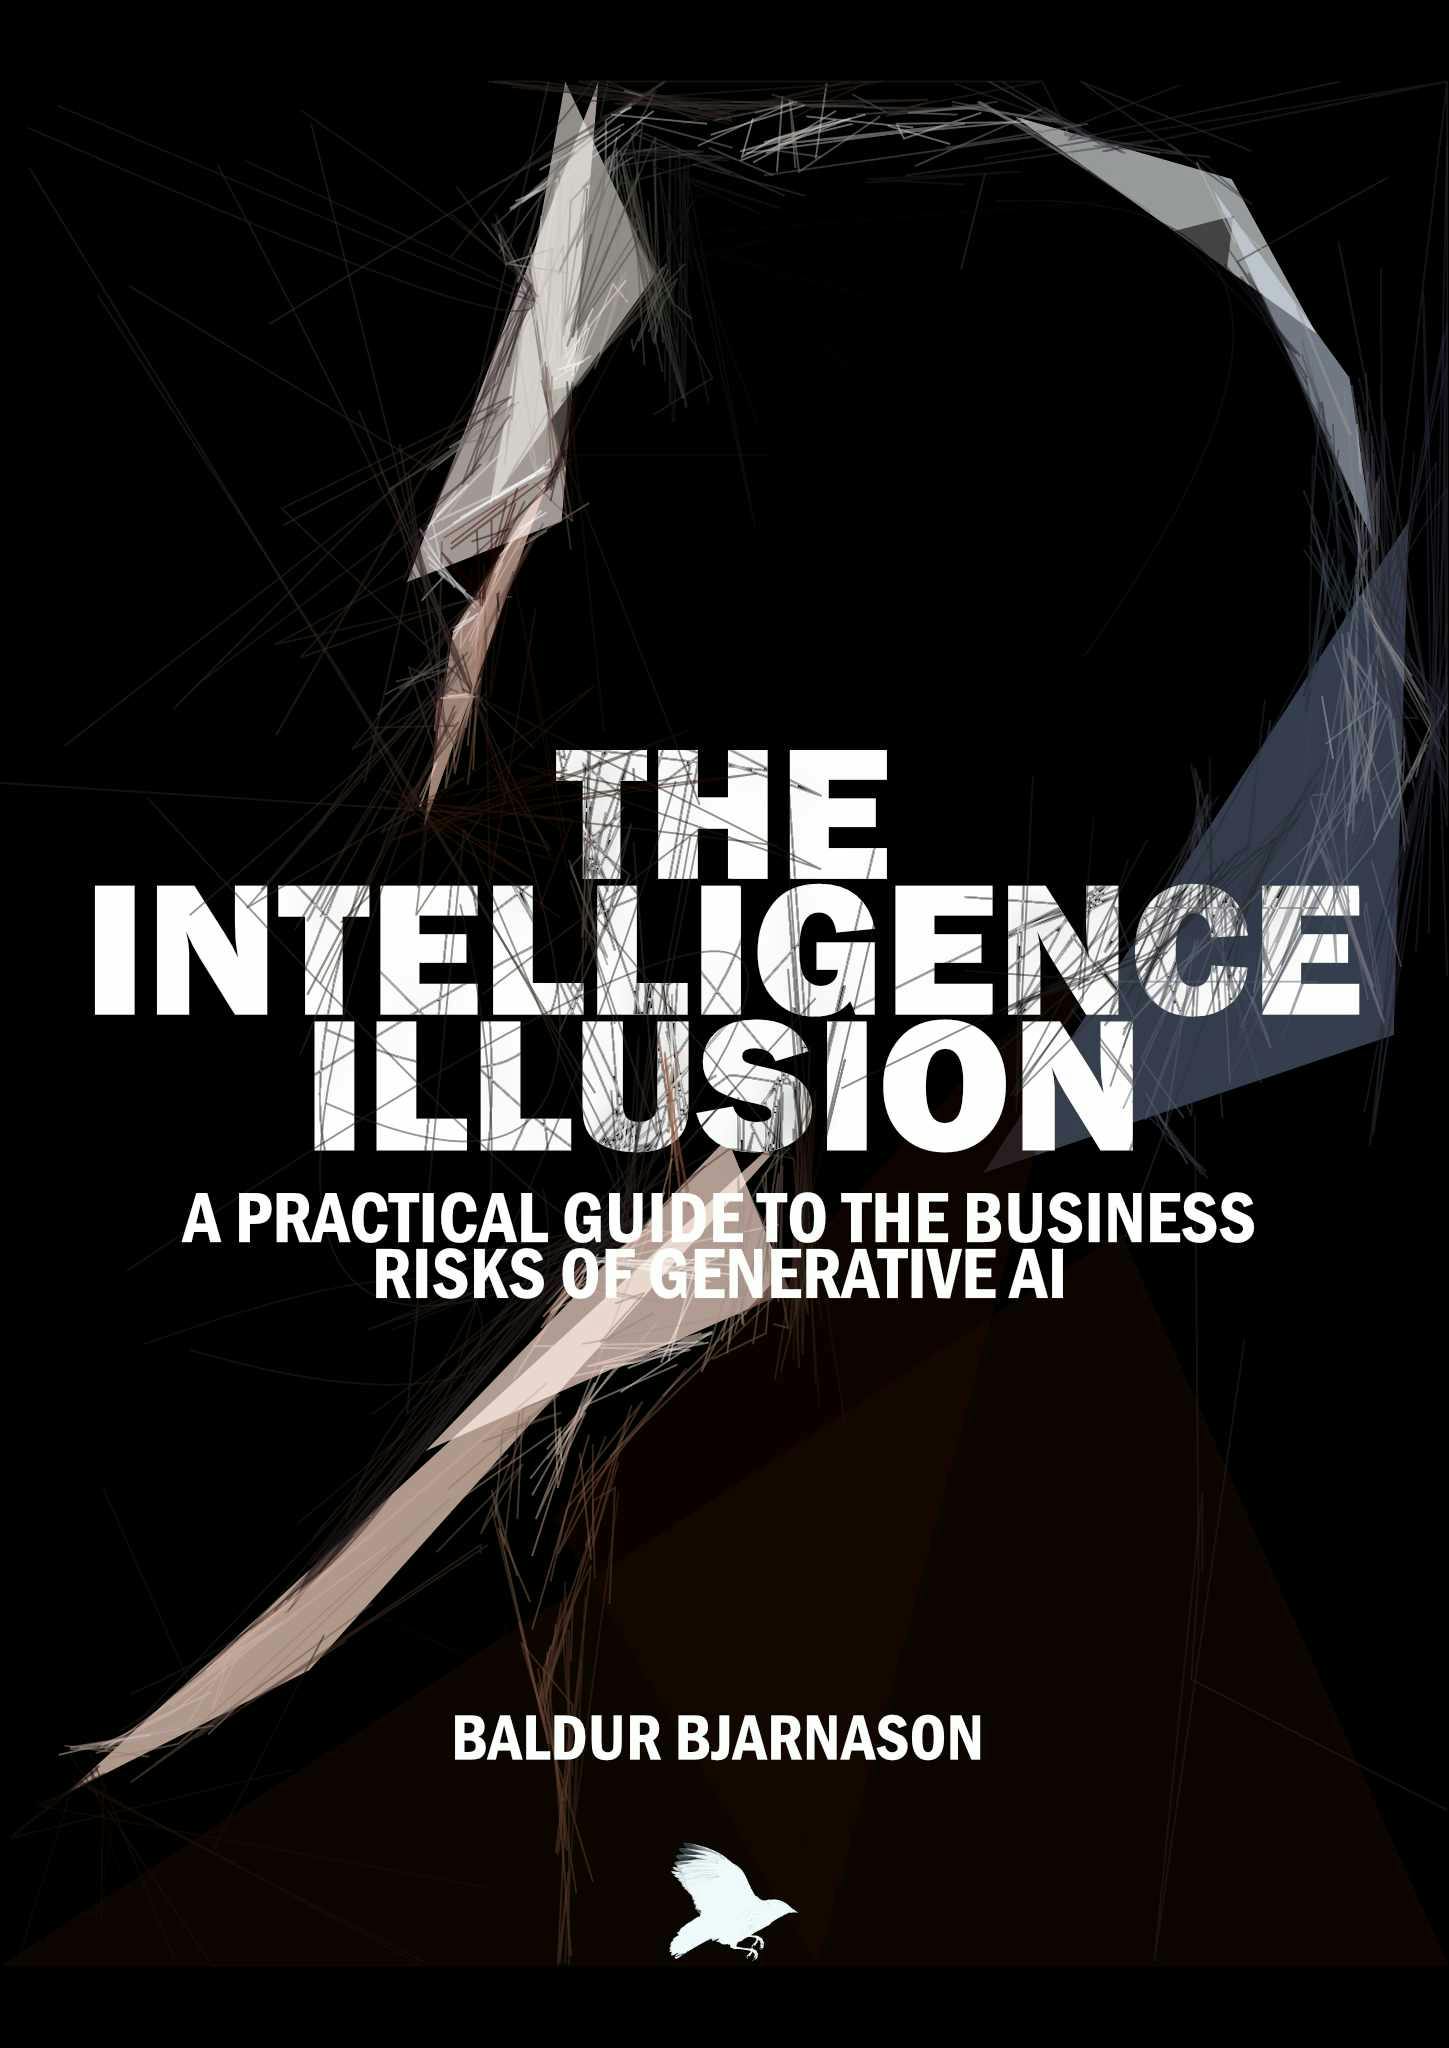 The Intelligence Illusion